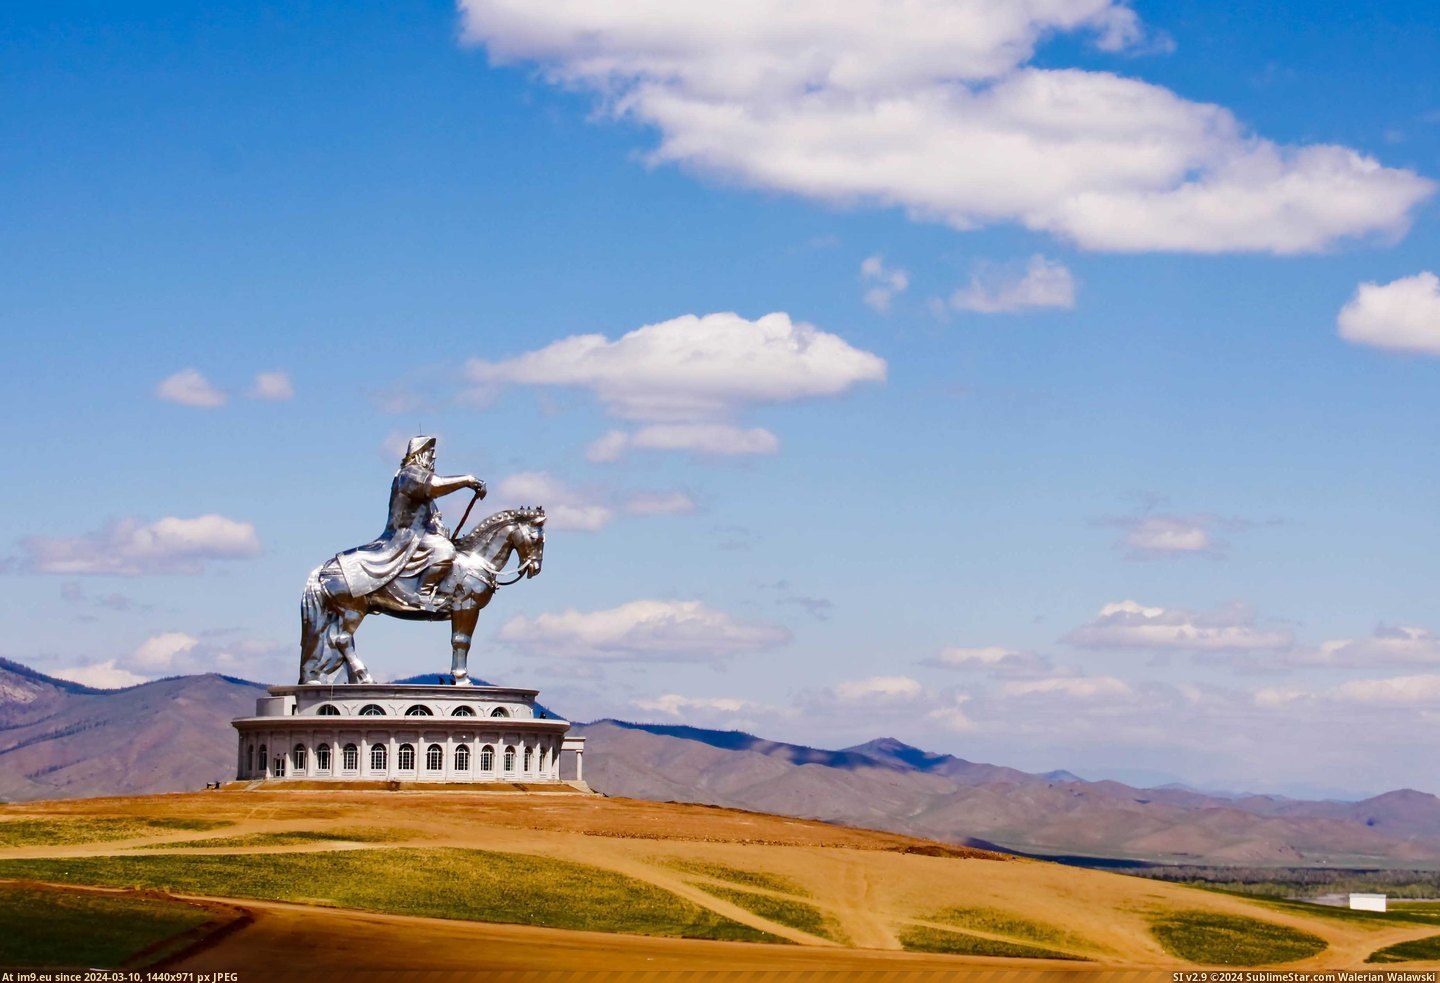 #Statue #Khan #Mongolia [Pics] Statue of Genghis Khan in Mongolia Pic. (Bild von album My r/PICS favs))